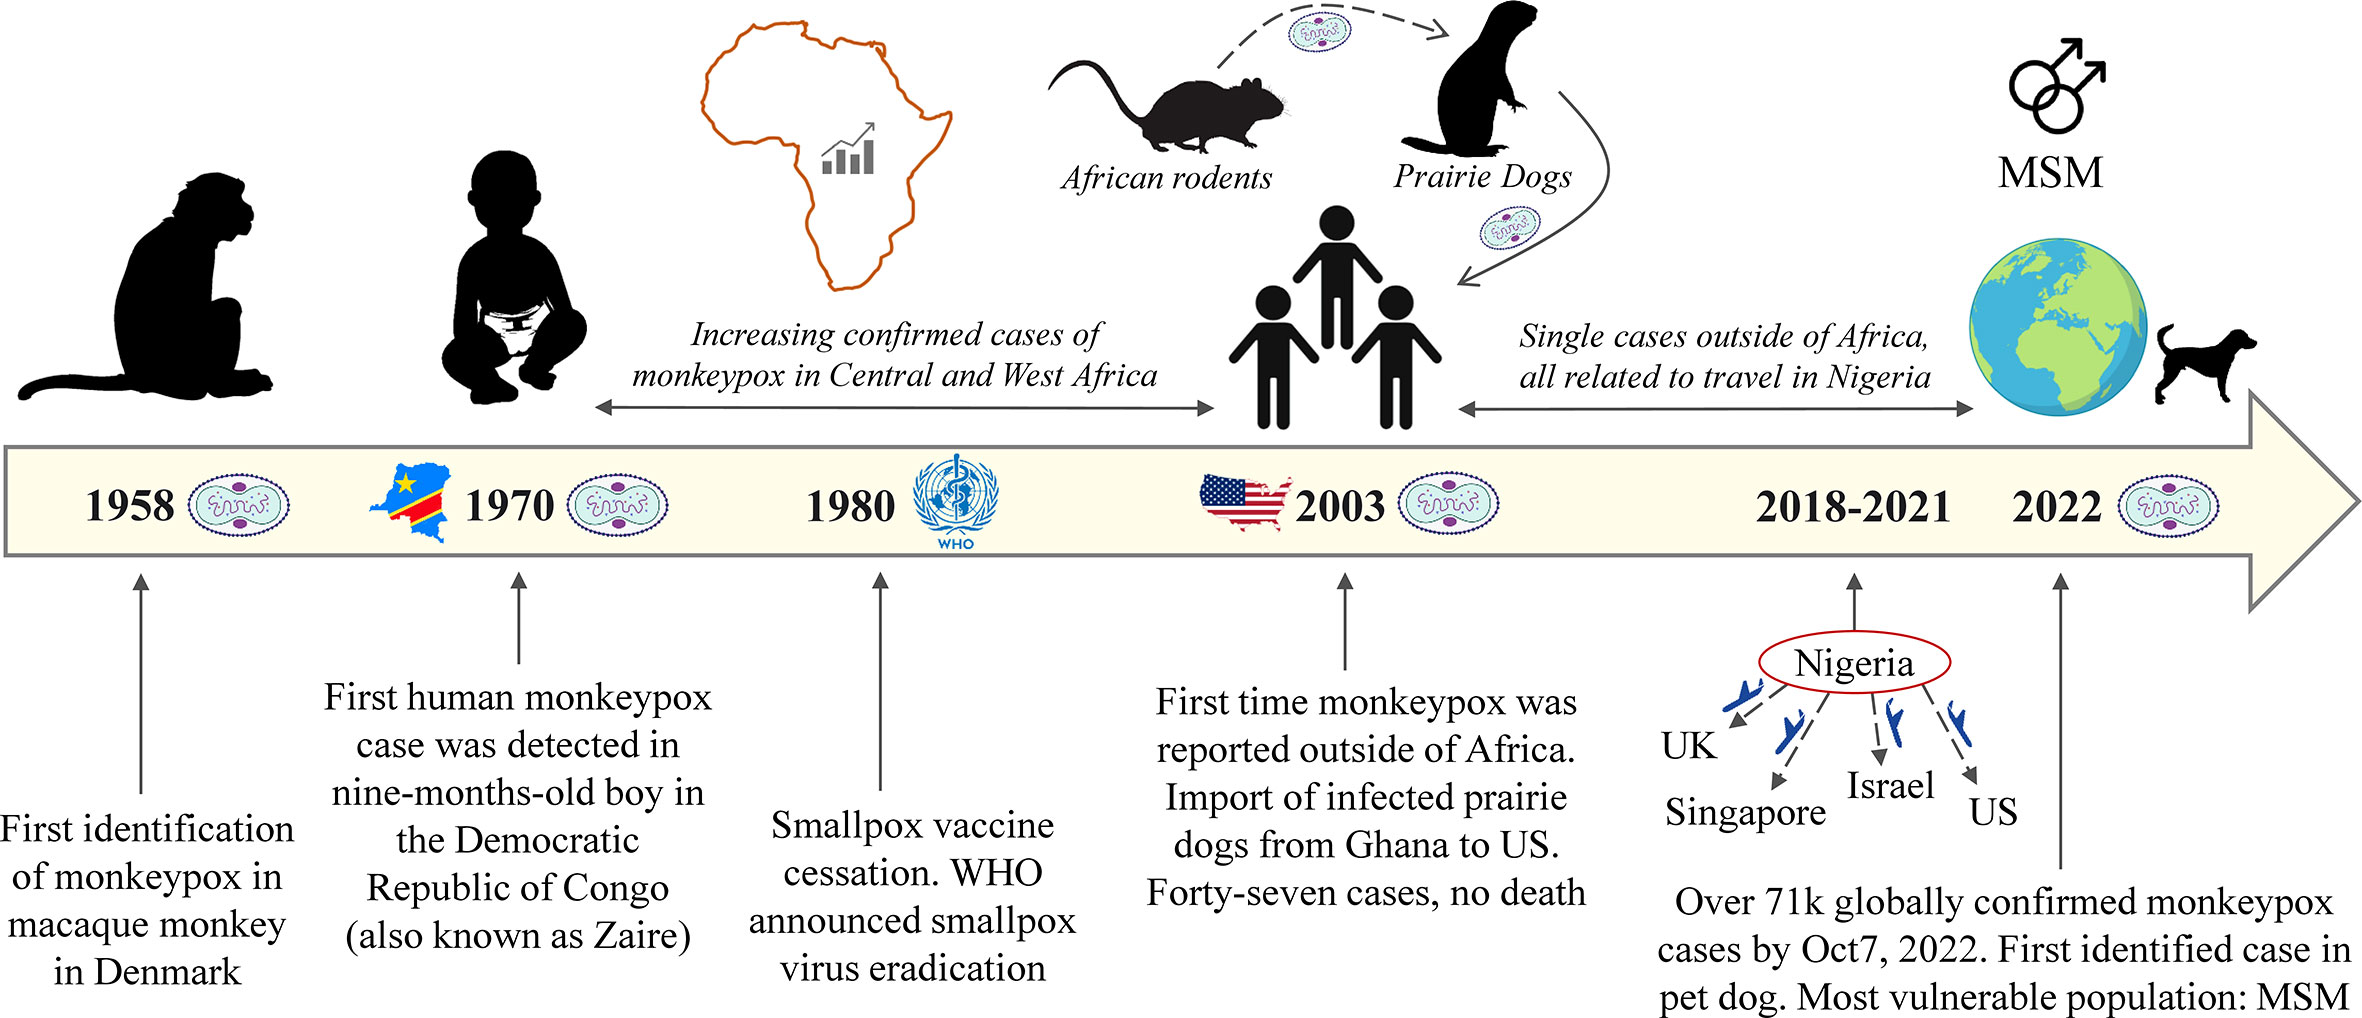 Monkeypox 101: Symptoms, Treatment, and Prevention